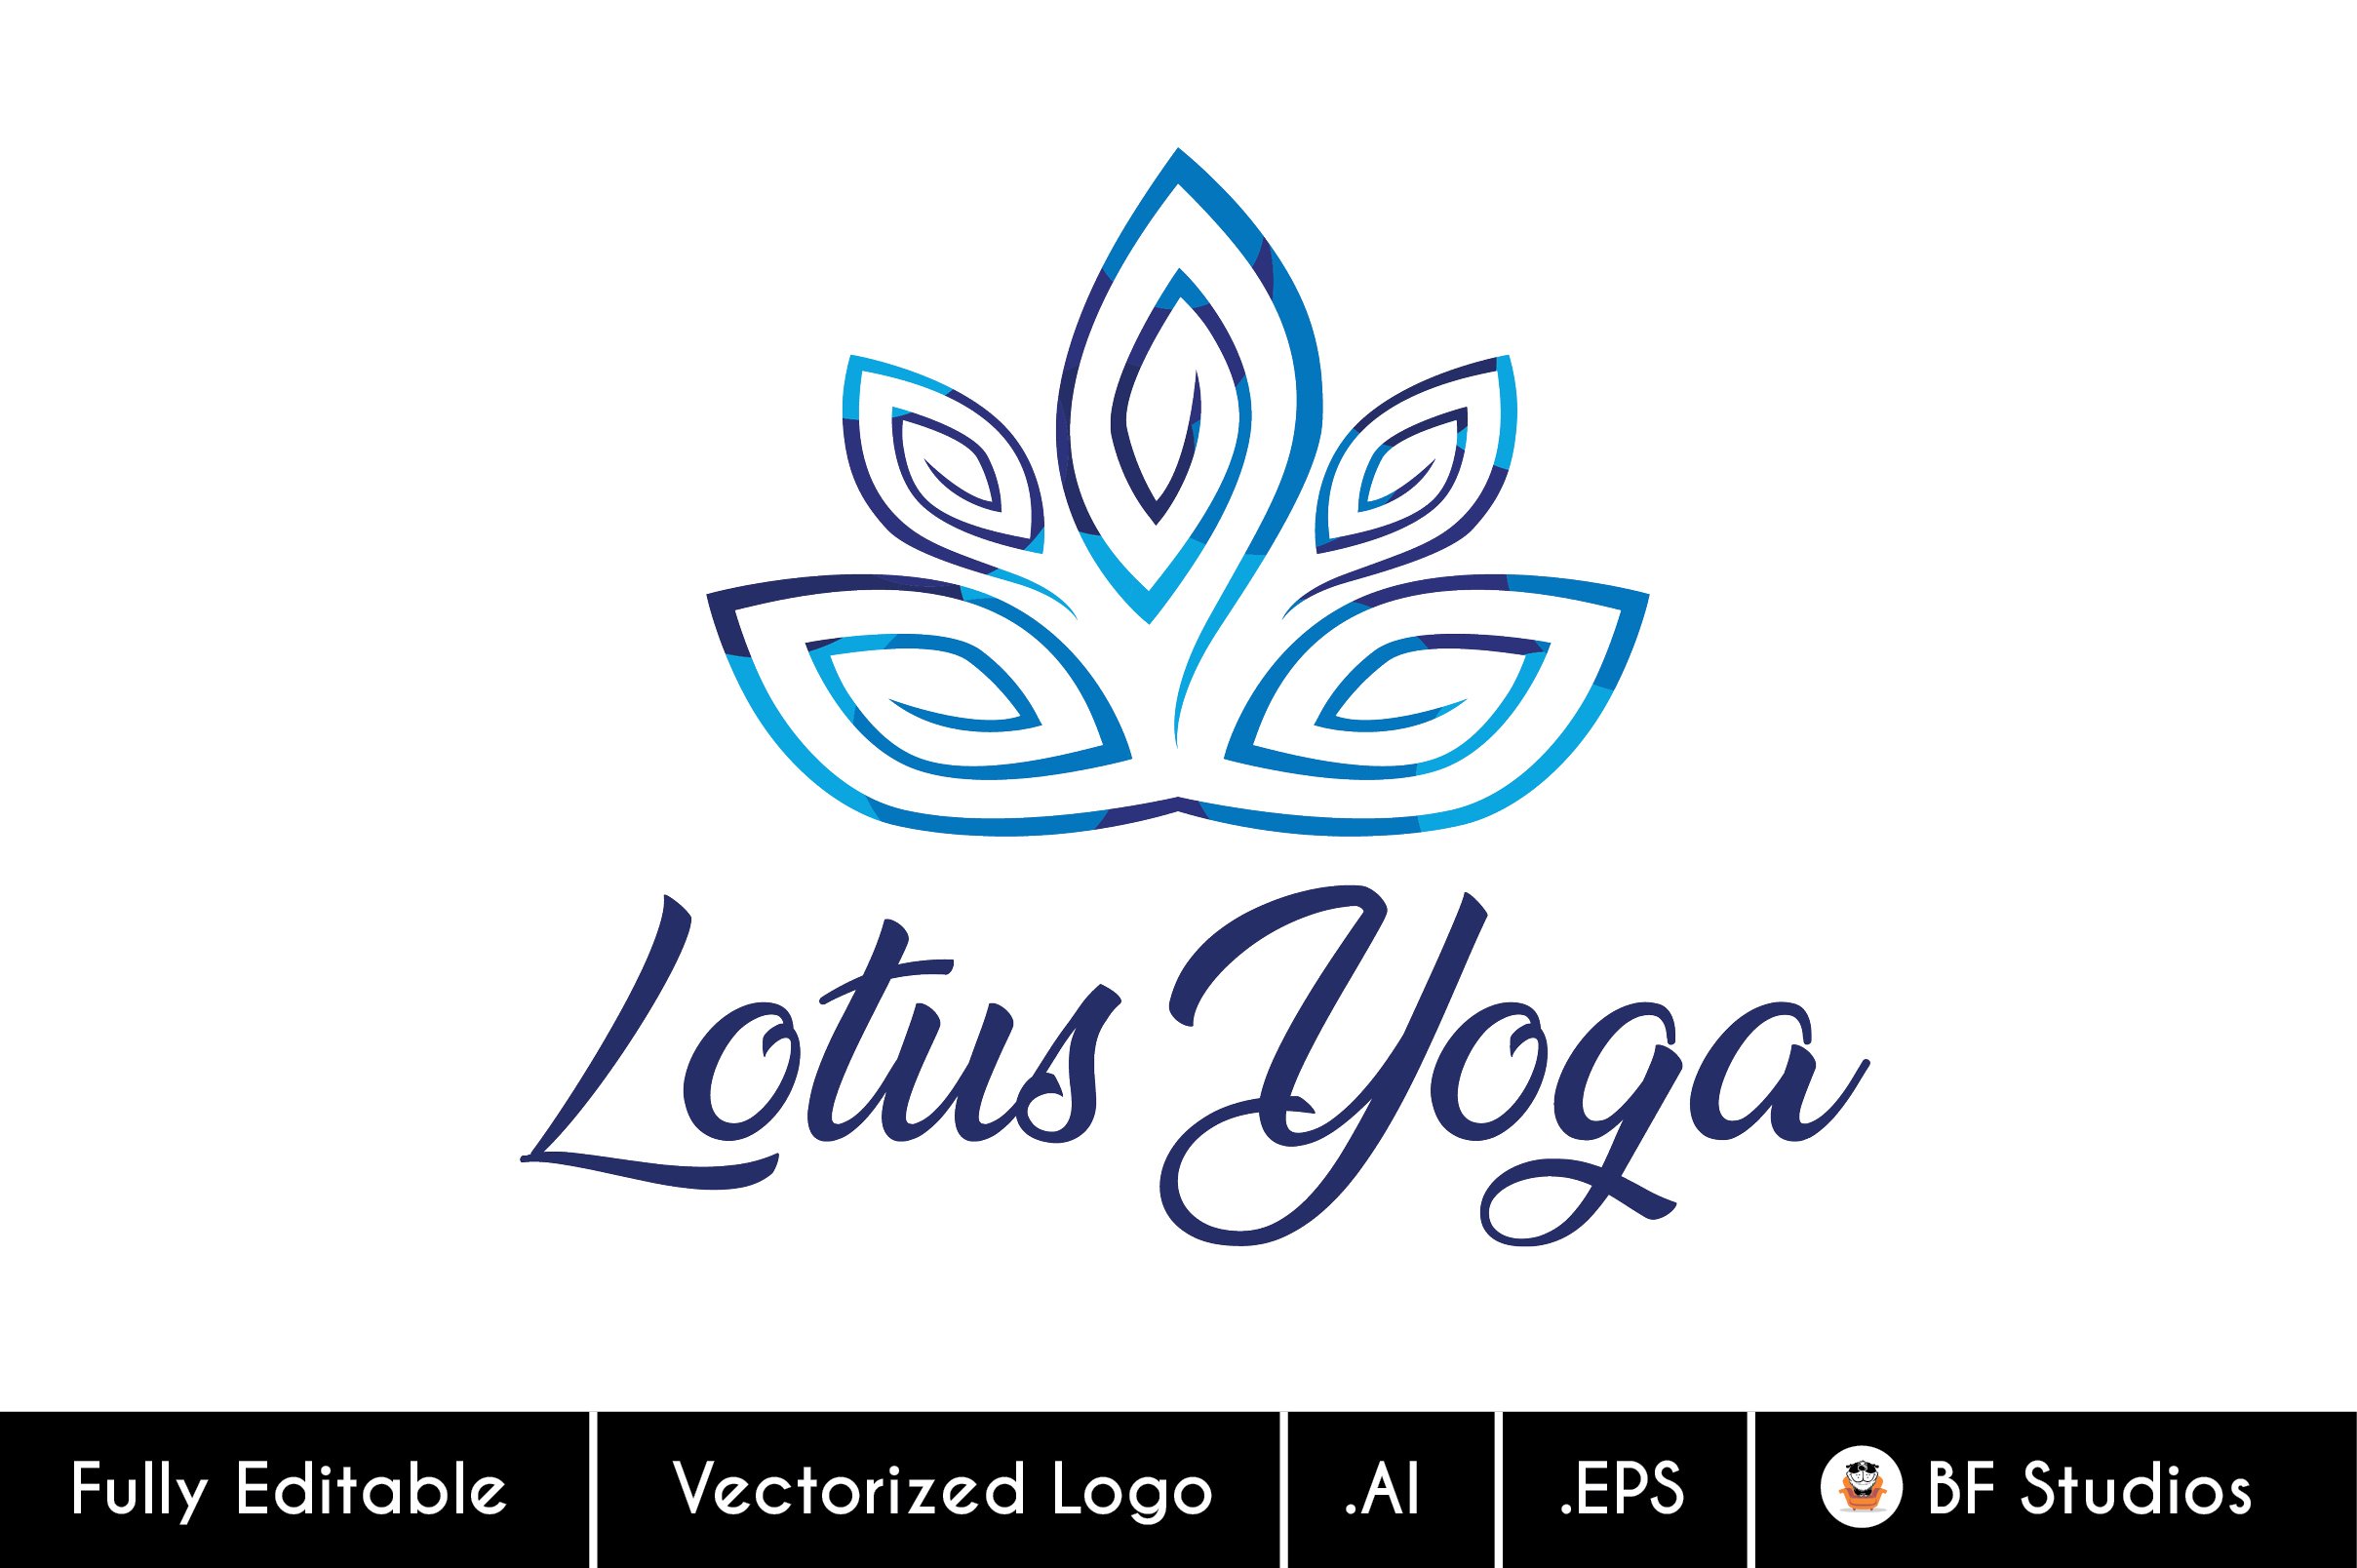 Lotus Yoga - Reiki Healing Logo 1 cover image.